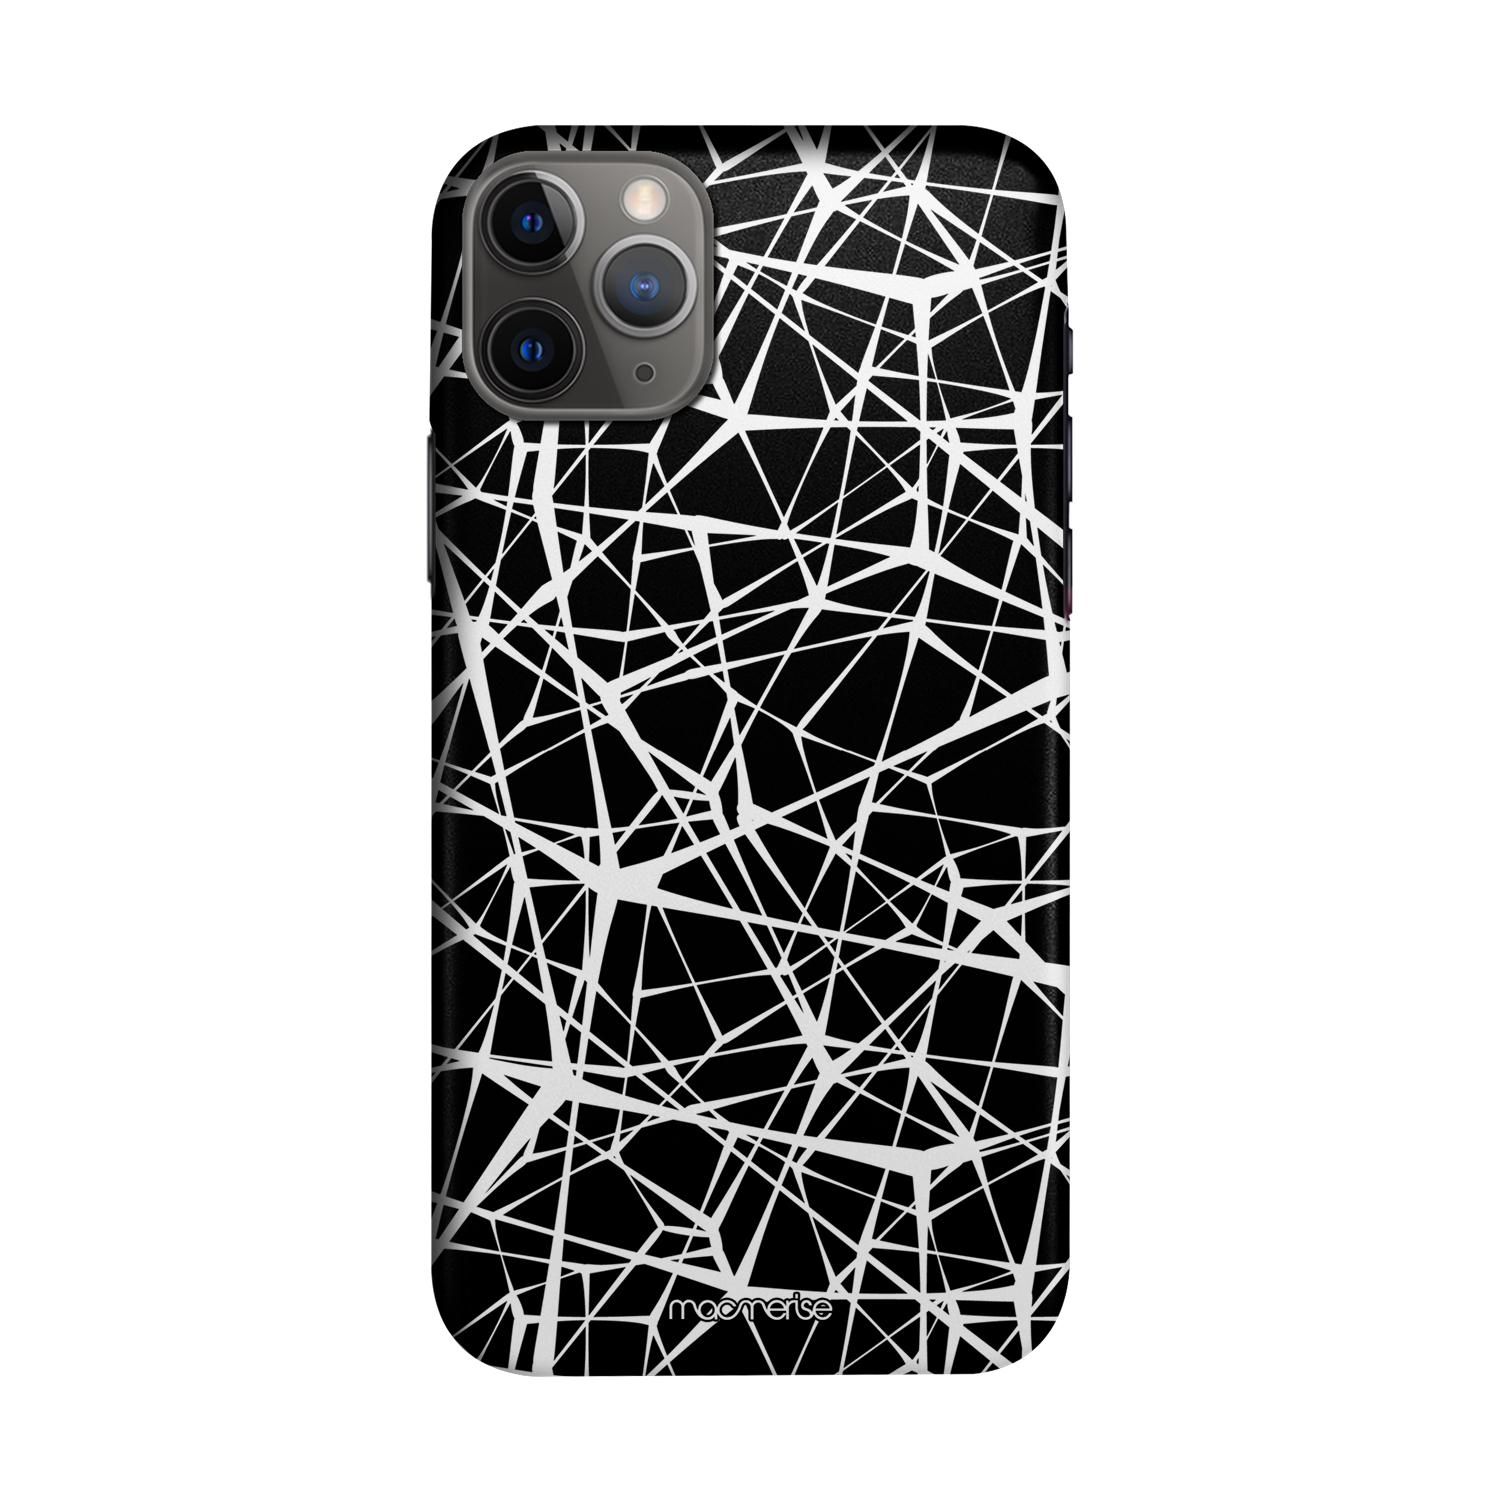 Buy Grunge Web - Sleek Phone Case for iPhone 11 Pro Max Online